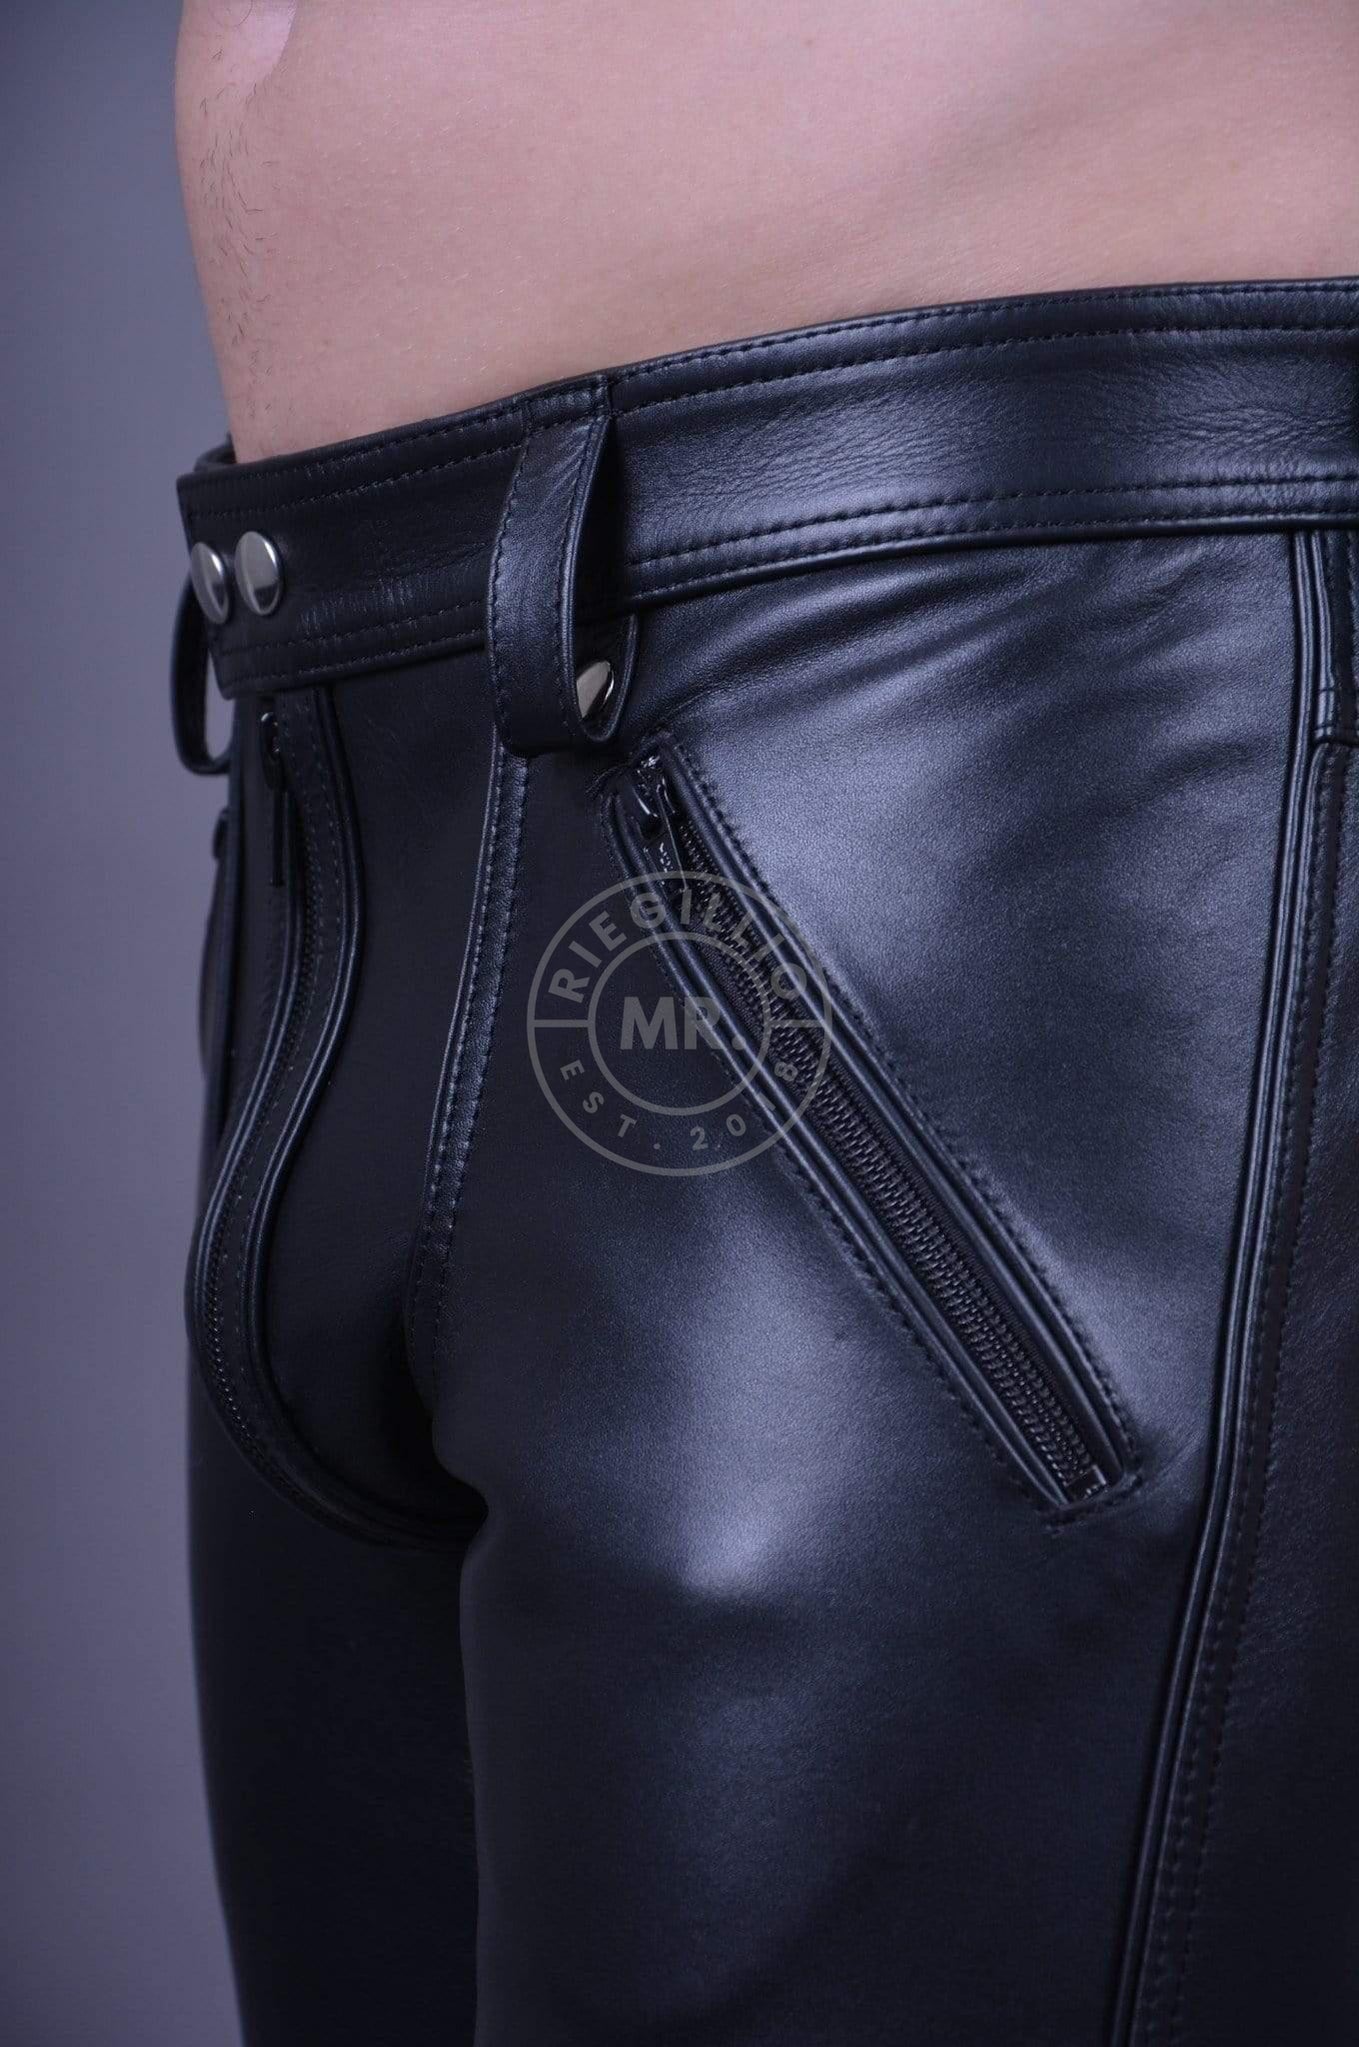 Mister B Leather FXXXer Jeans All Black at MR. Riegillio